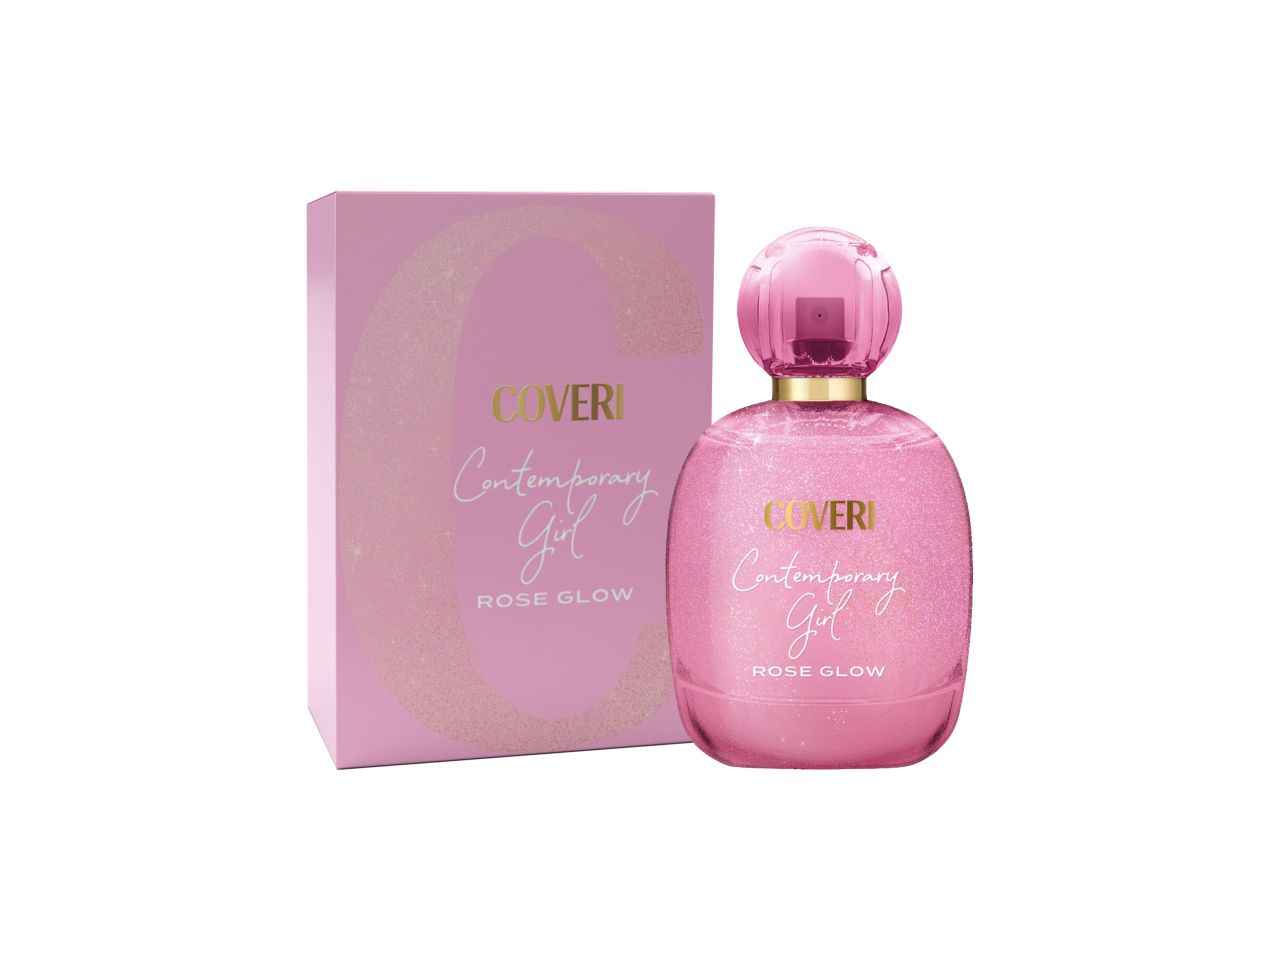 Enrico coveri contemporary girl rose glow eau de parfum 100ml